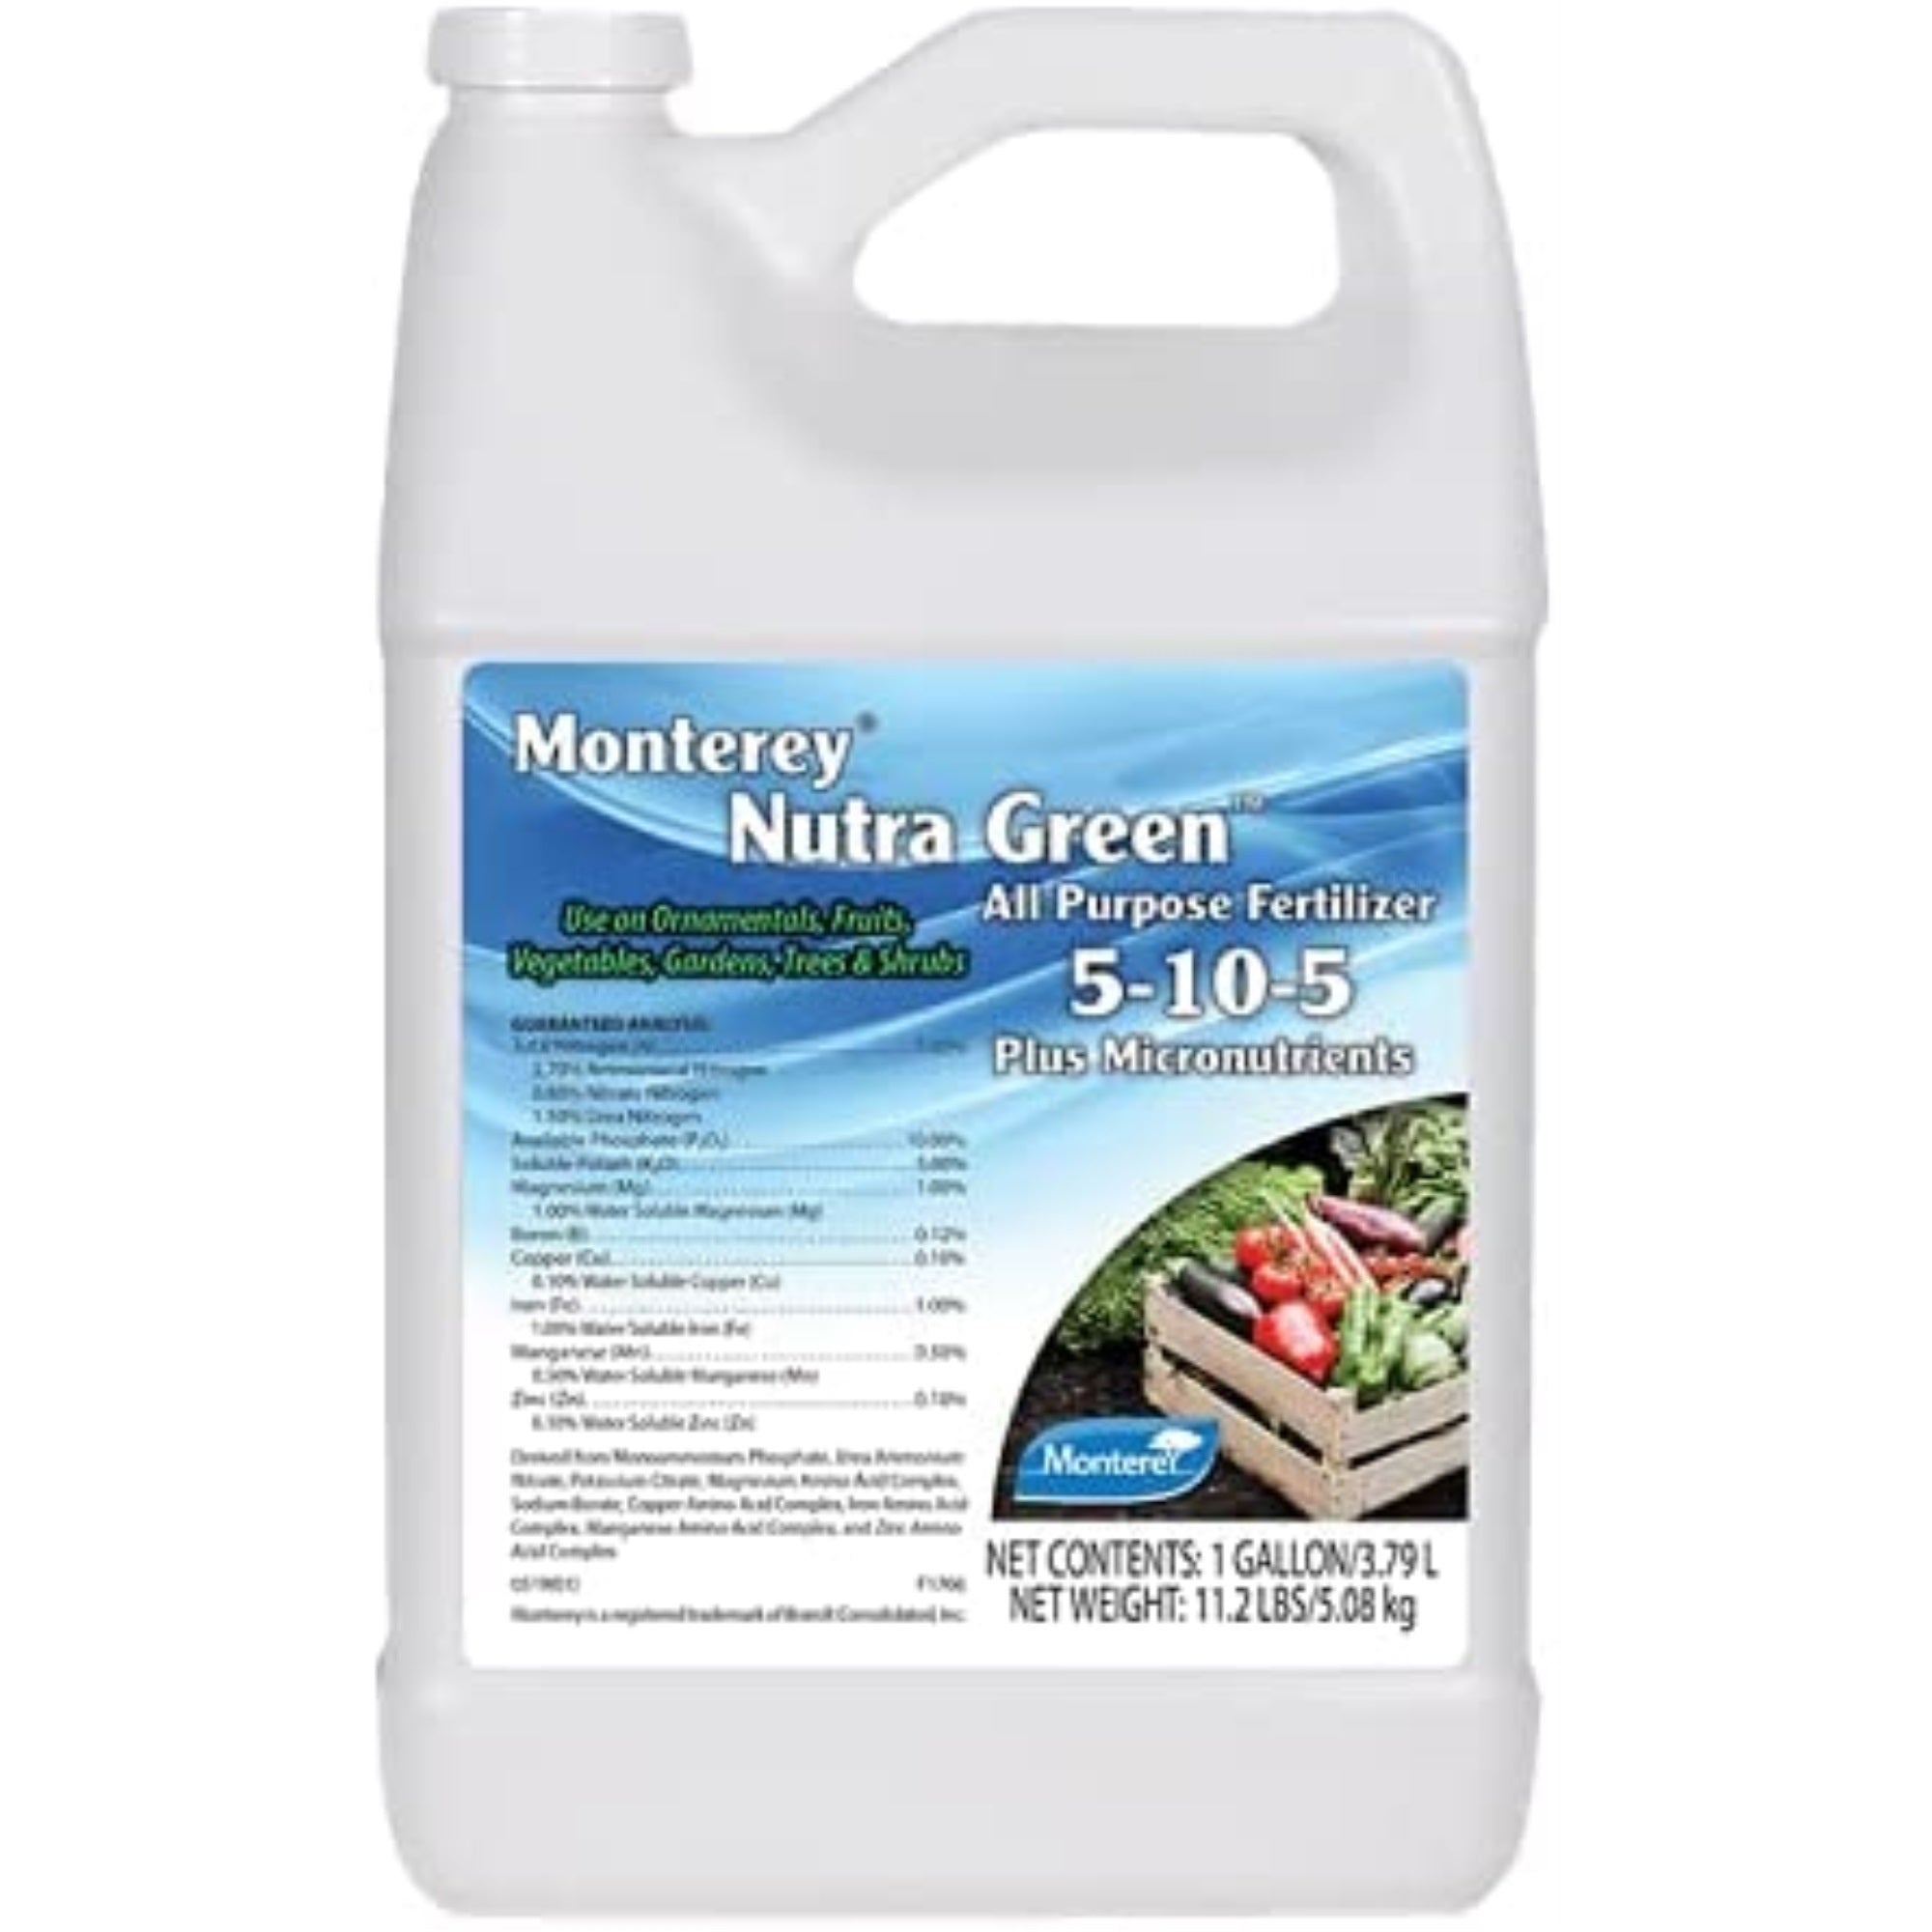 Monterey Concentrate Nutra Green All Purpose Plant Fertilizer 5-10-5 + Micronutrients, 1 Gallon